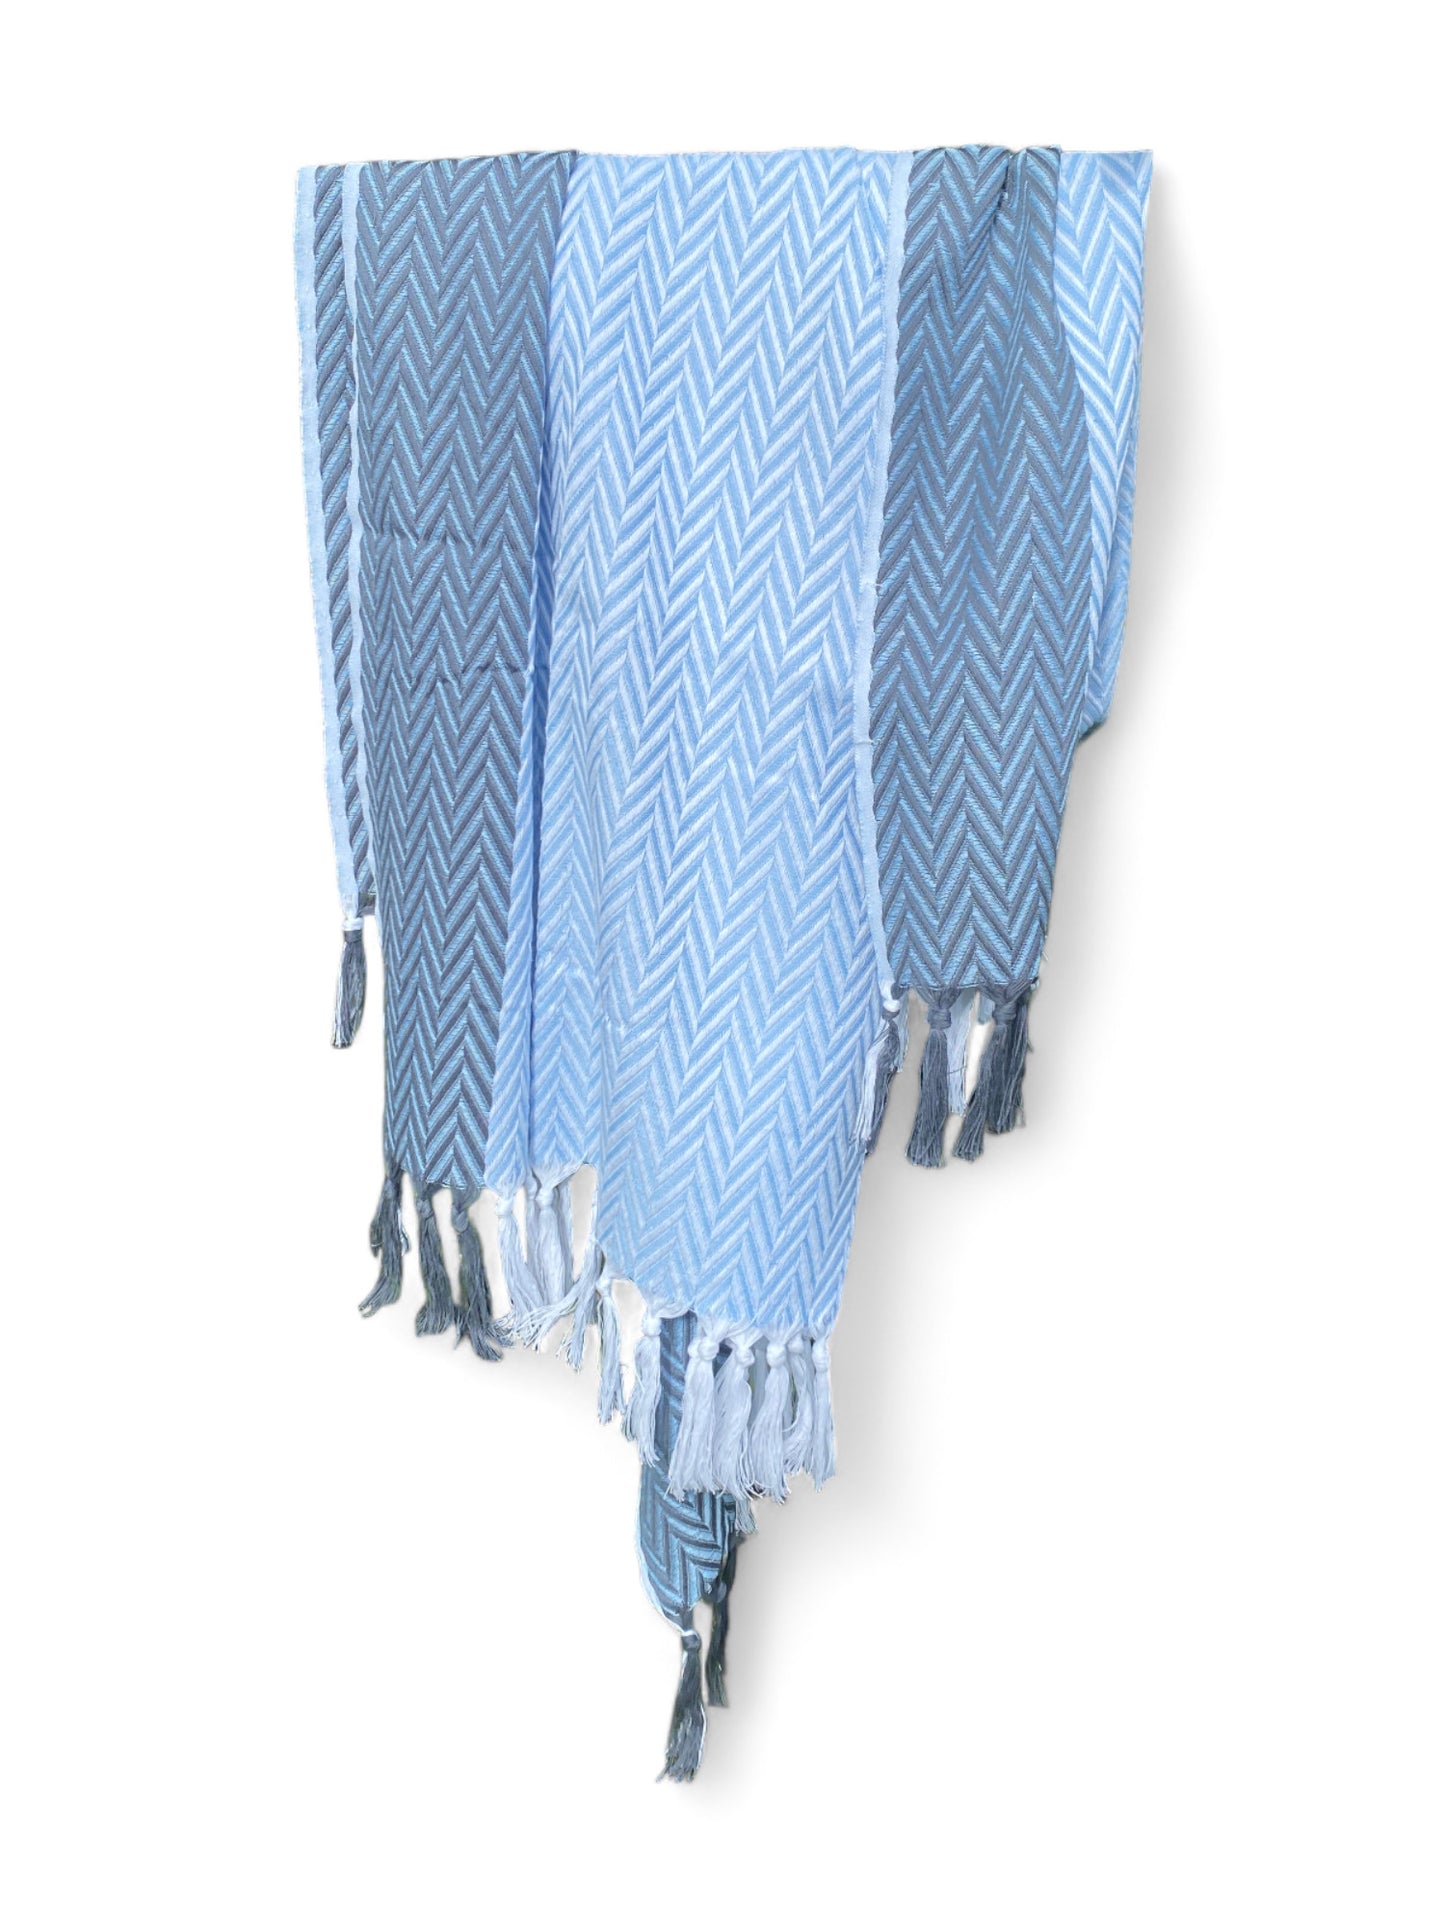 Hammam Towel (Cotton and Linen)